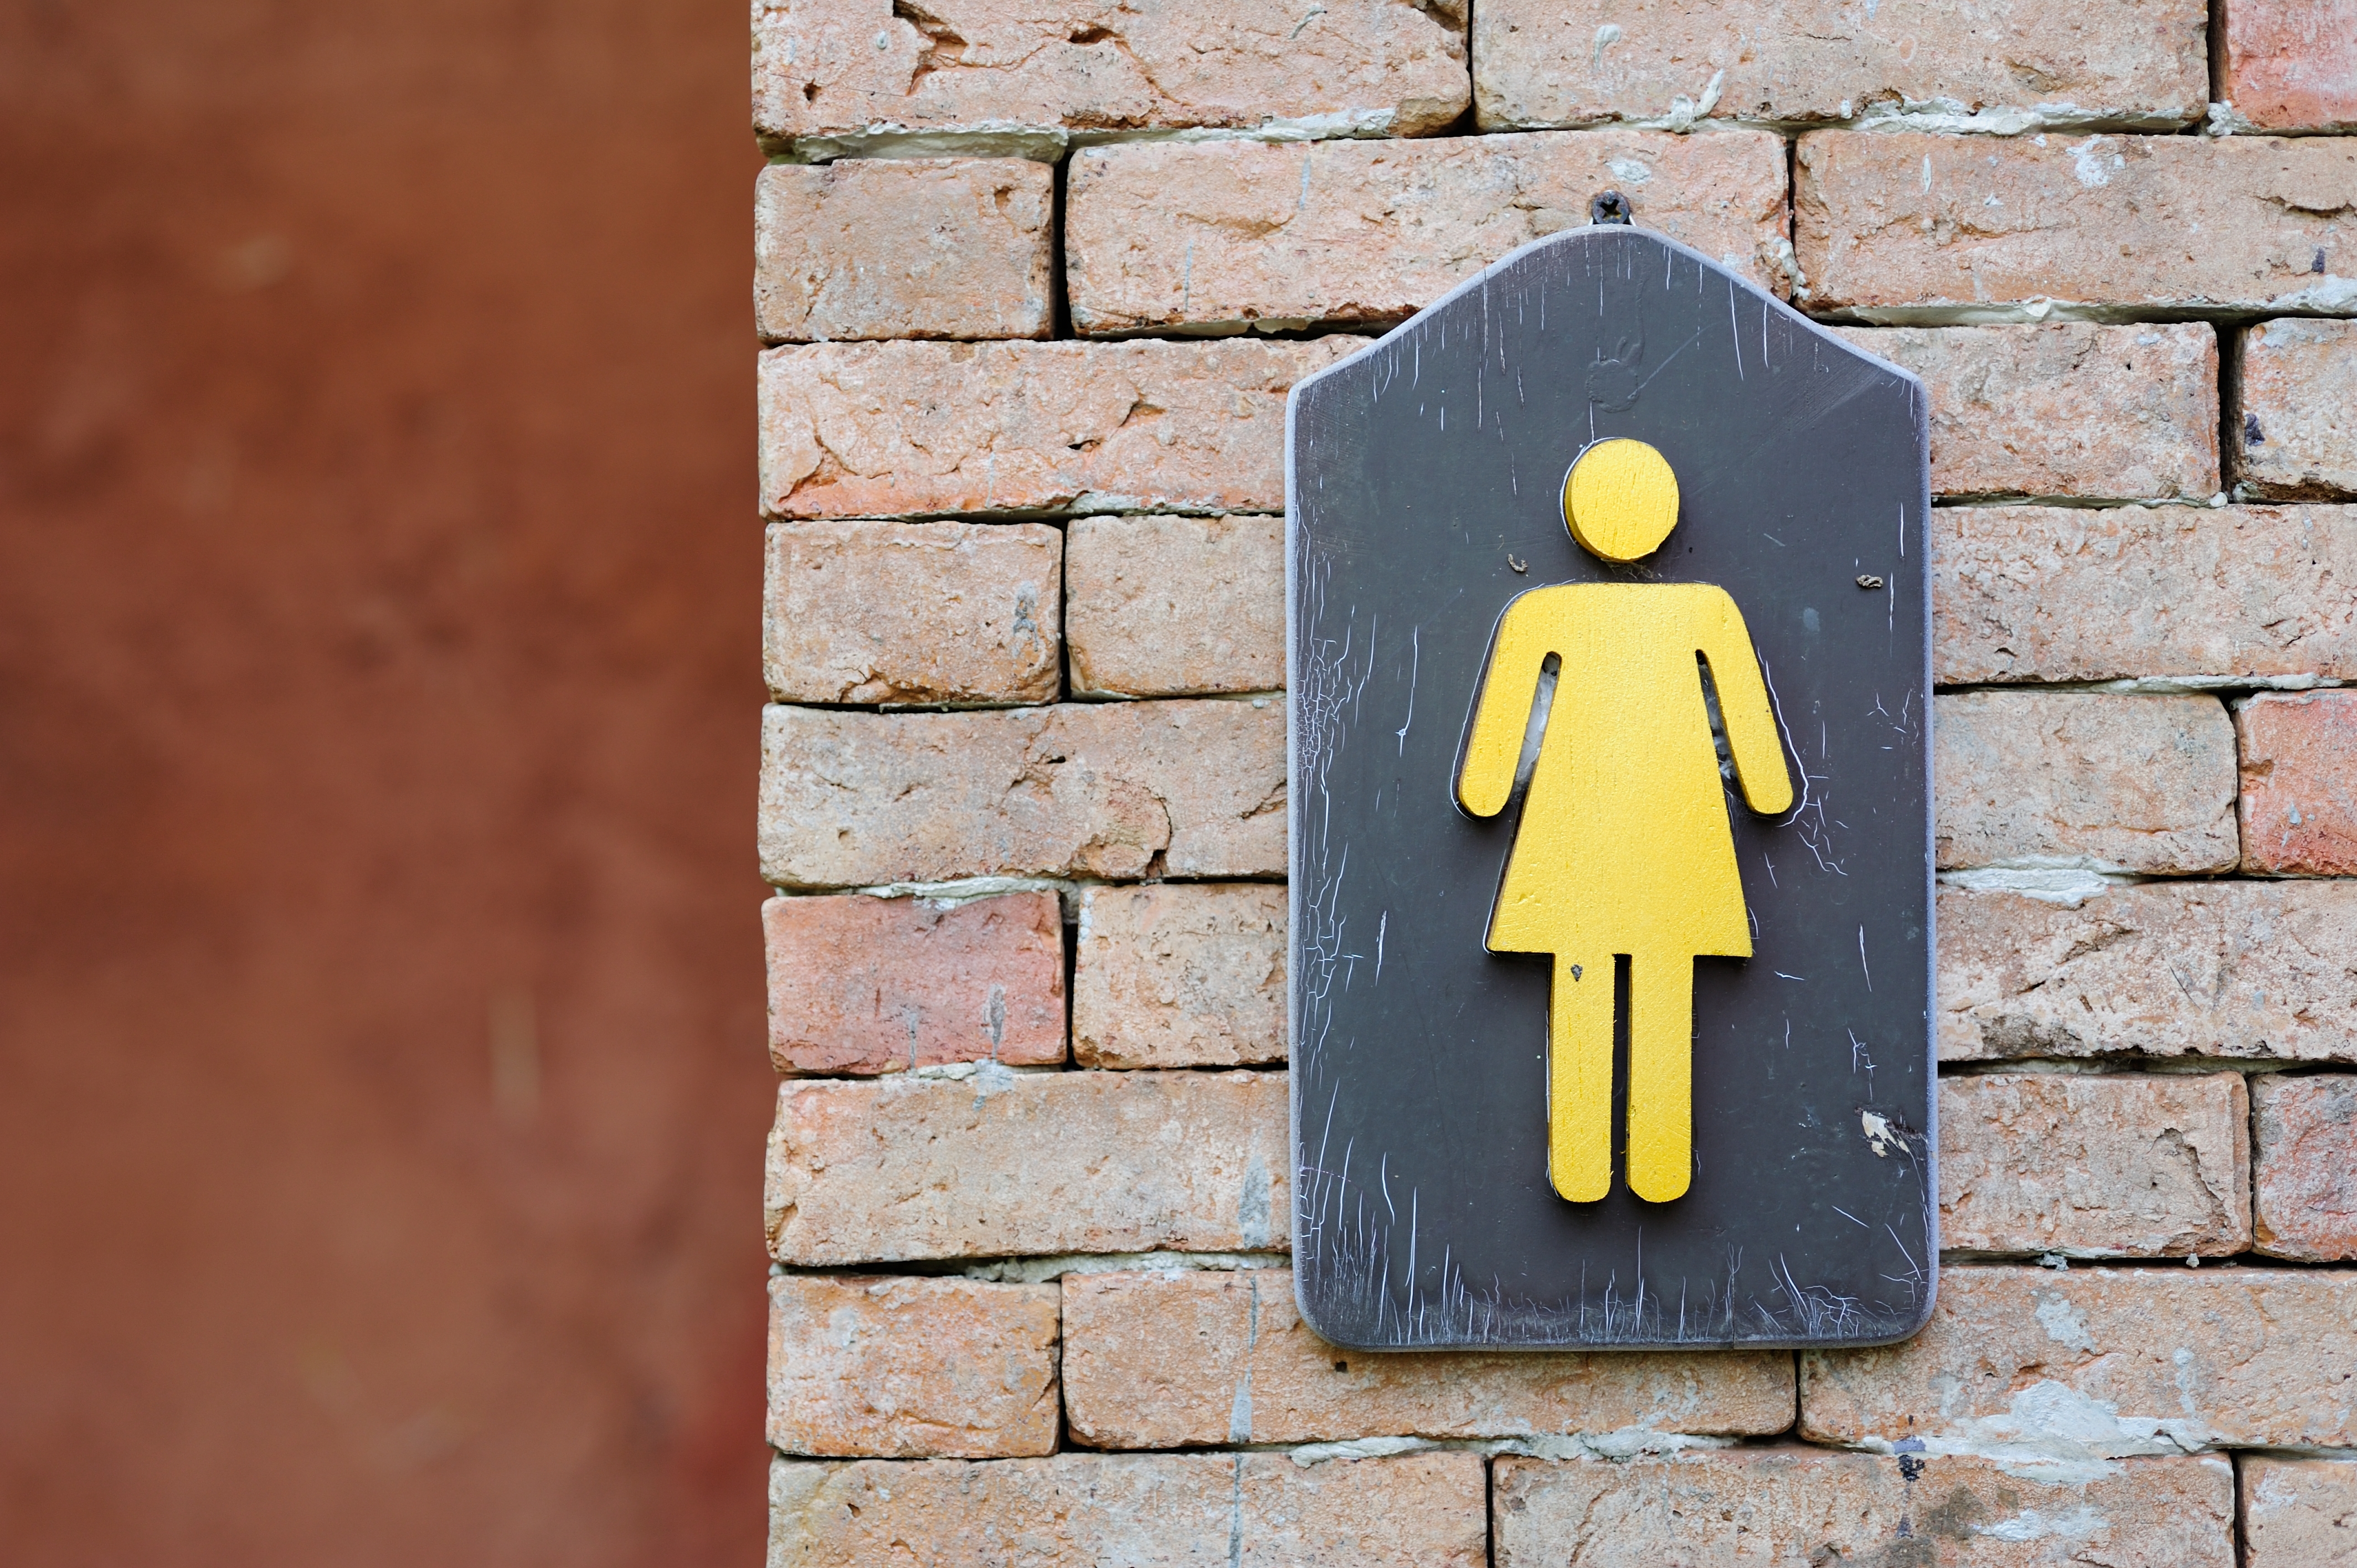 Woman's universal bathroom symbol - incontinence